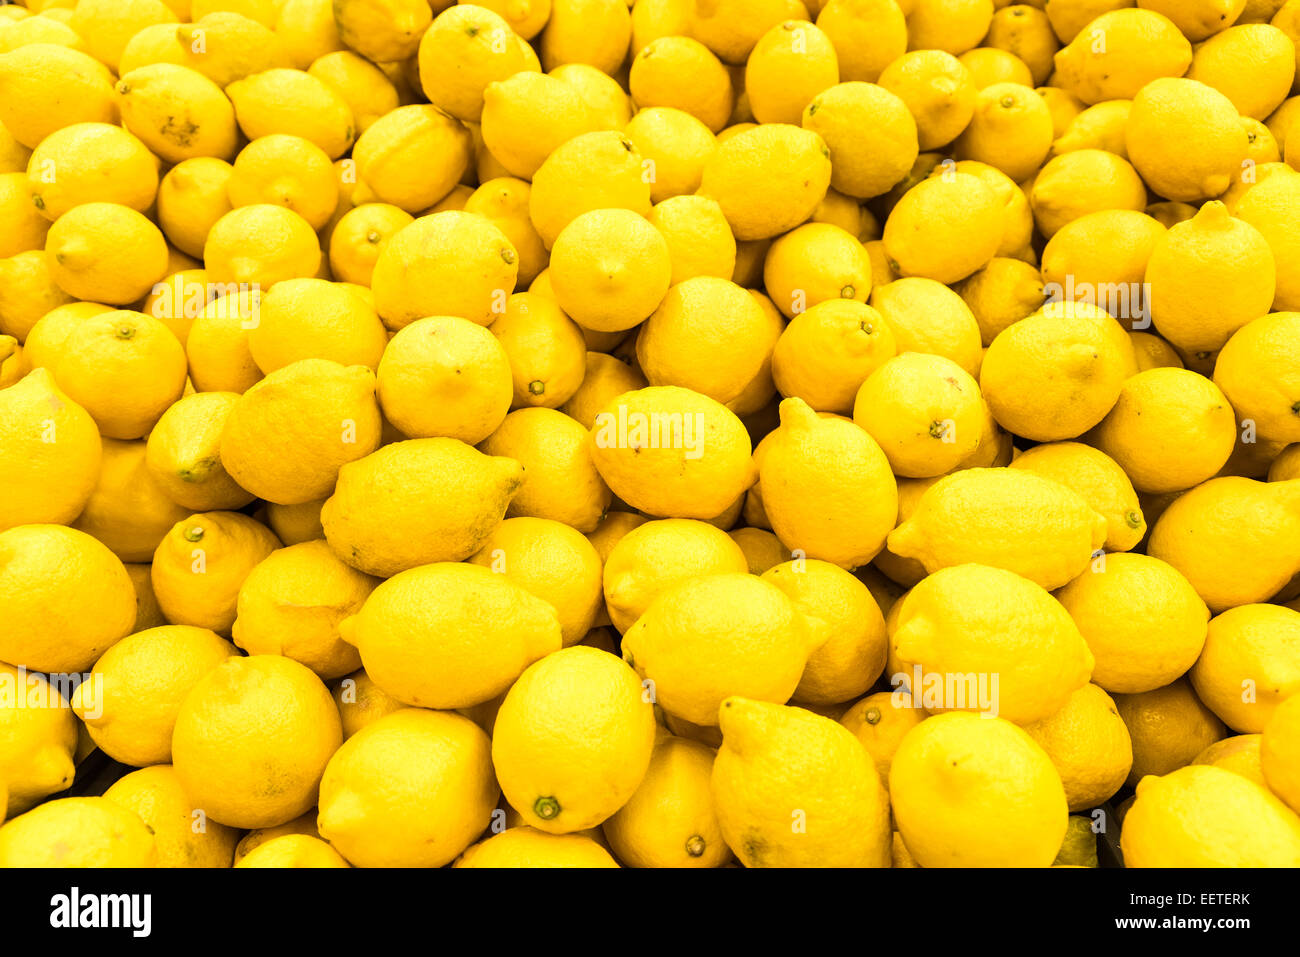 Colorful Display Of Lemons In Fruit Market Stock Photo